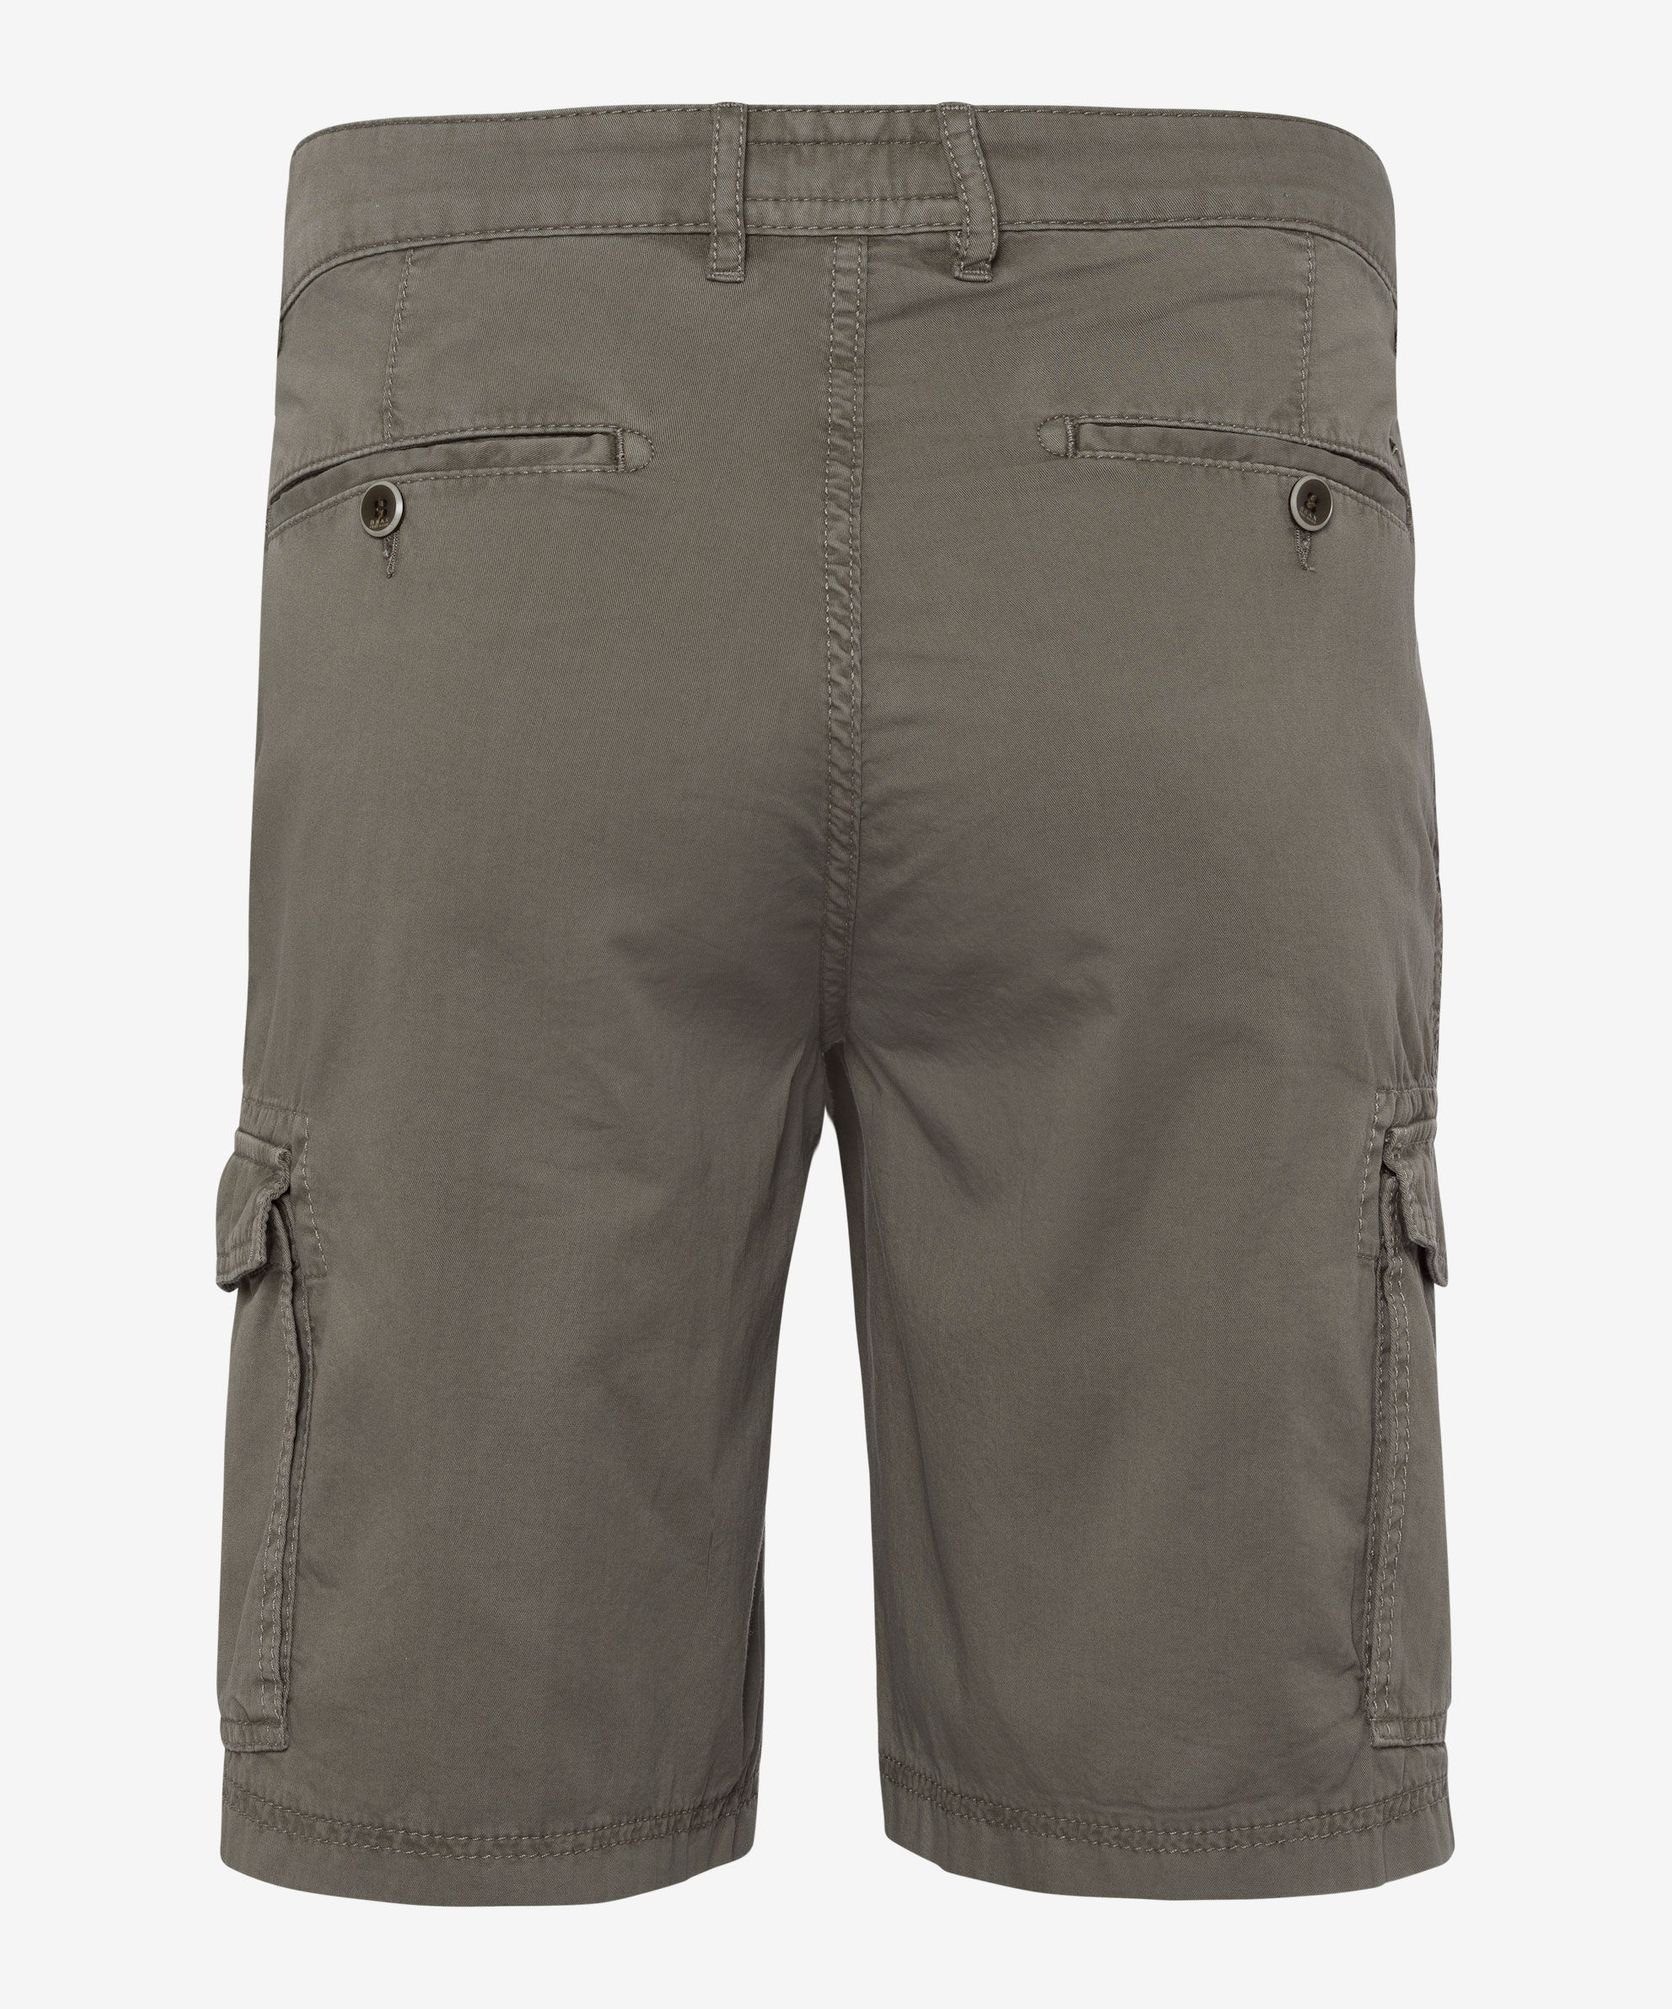 Brax Shorts Style Khaki (32) Brazil (82-6858)